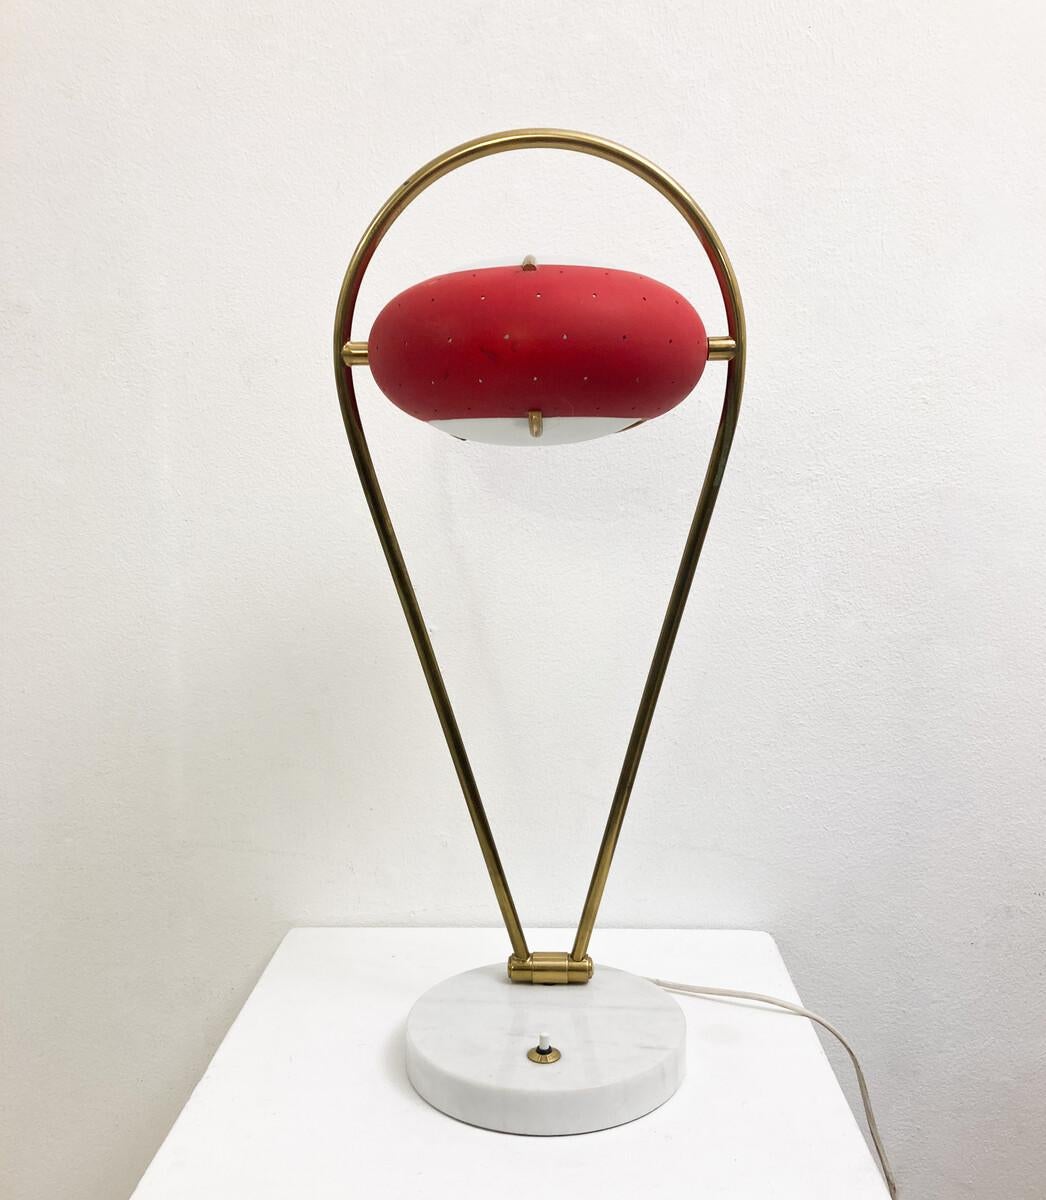 Stilux Italian red desk lamp, Italy, 1950s.